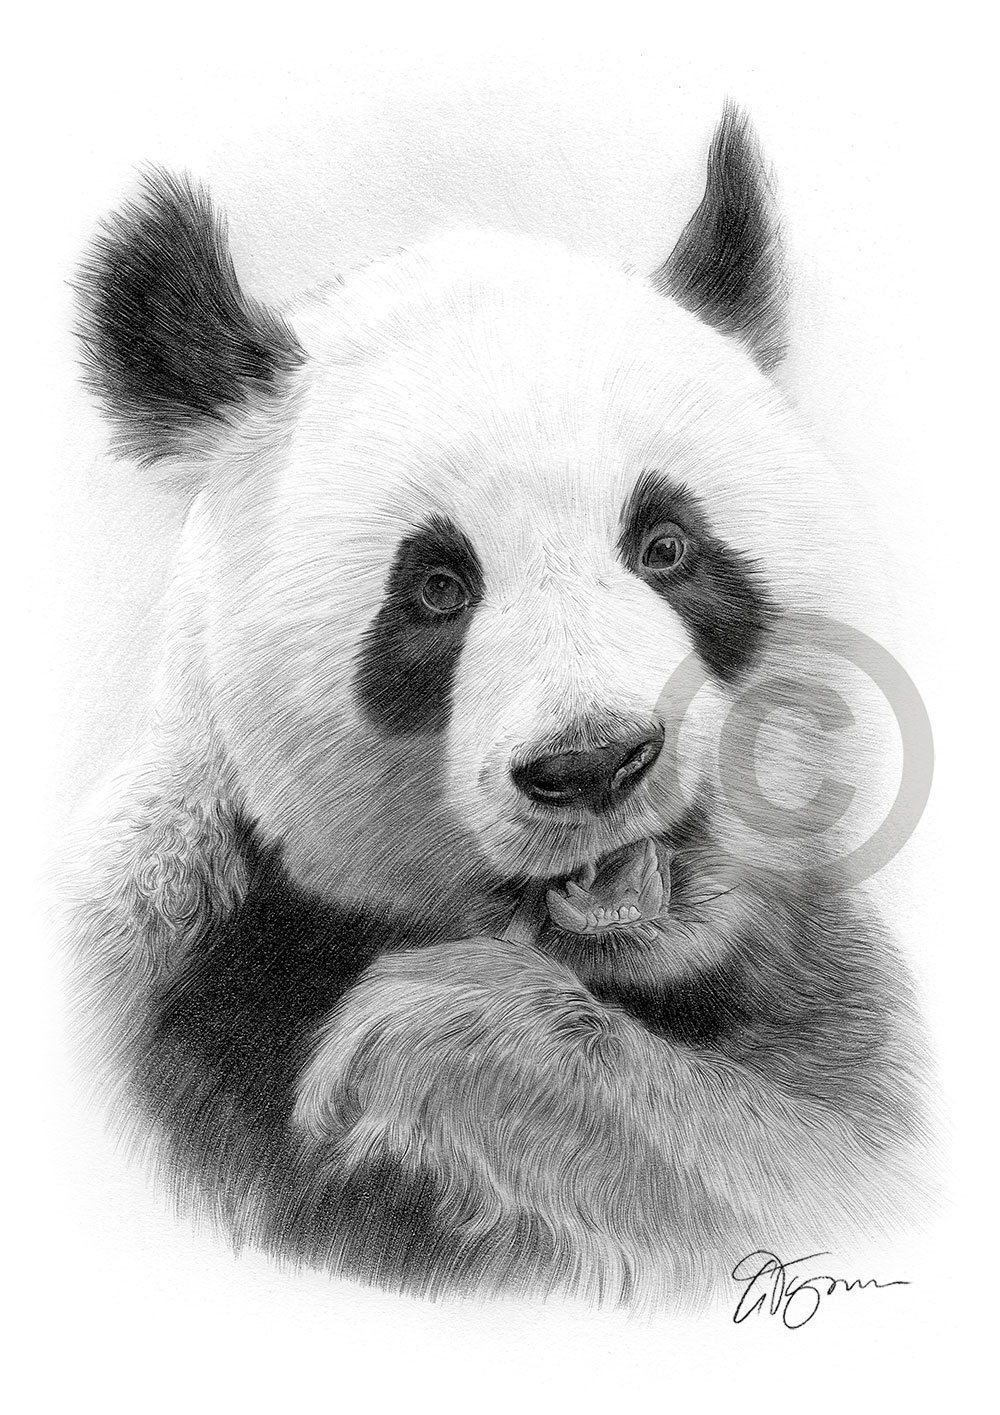 Pencil drawing of an adult giant panda by UK artist Gary Tymon